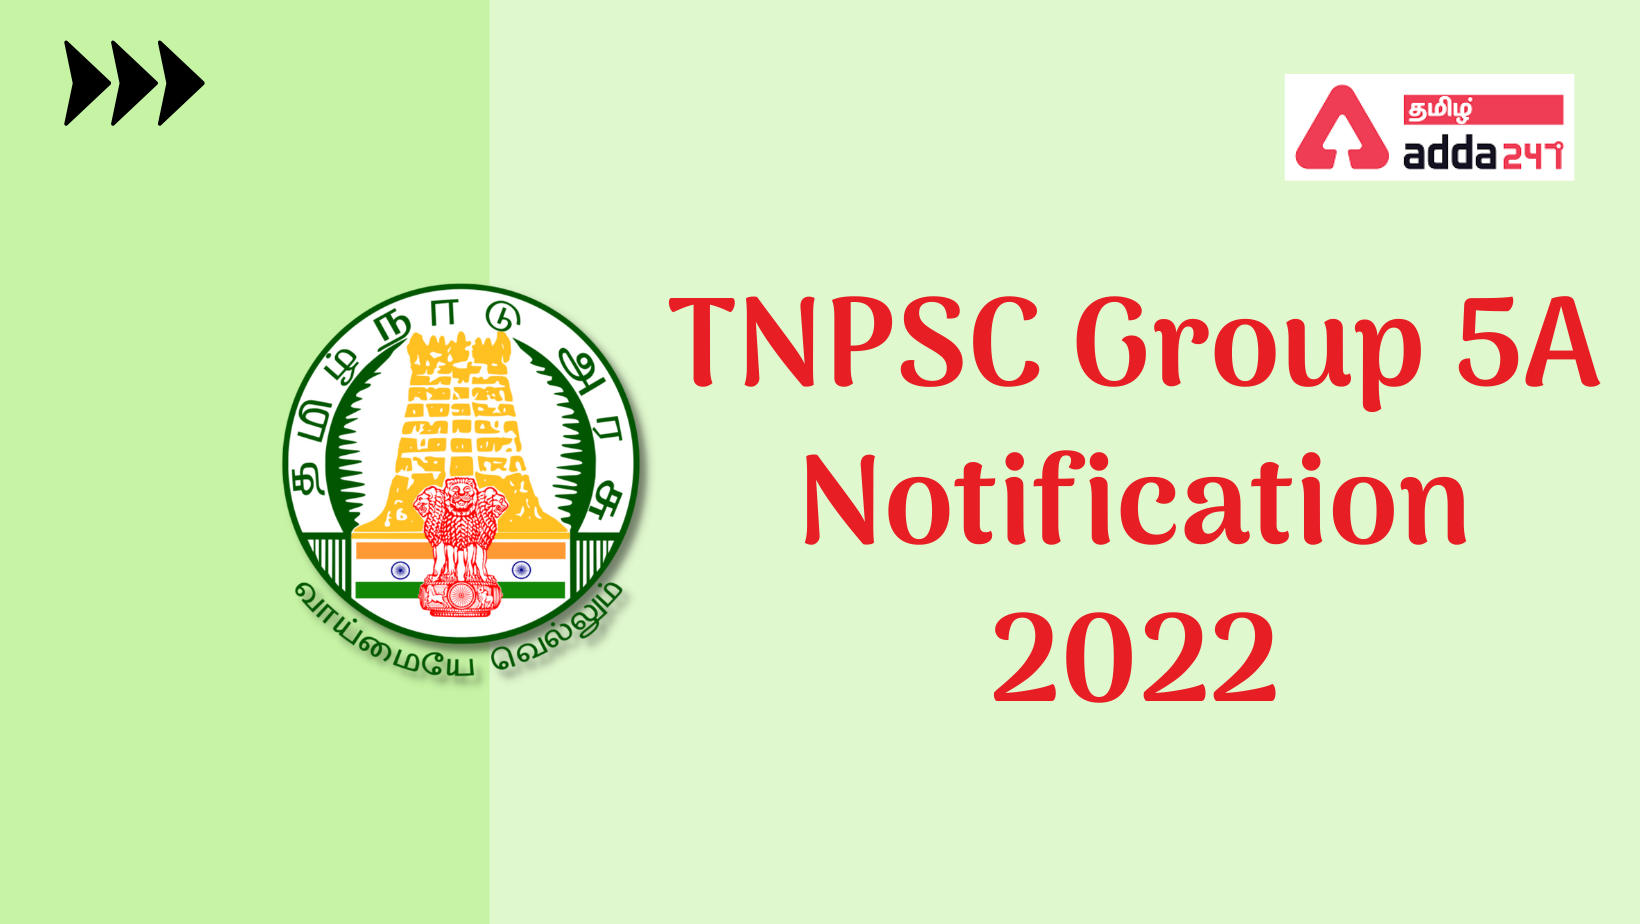 TNPSC Group 5A Notification 2022